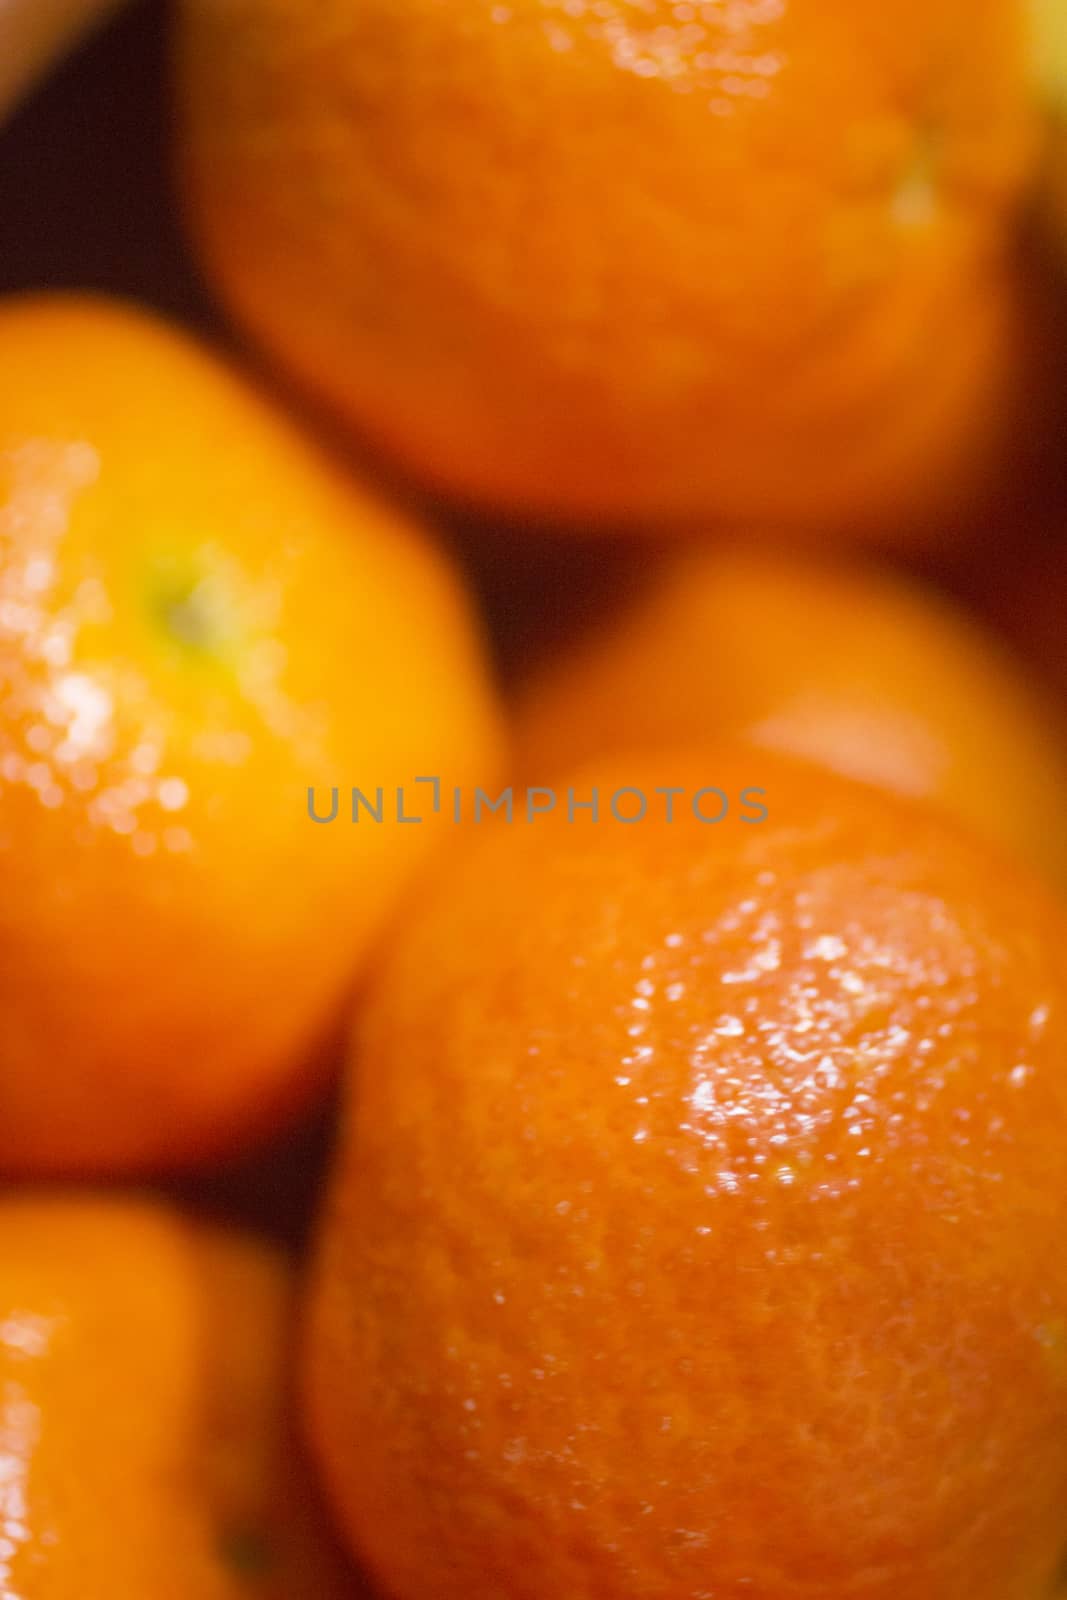 Fresh mandarins tangerine clementines oranges by edwardolive